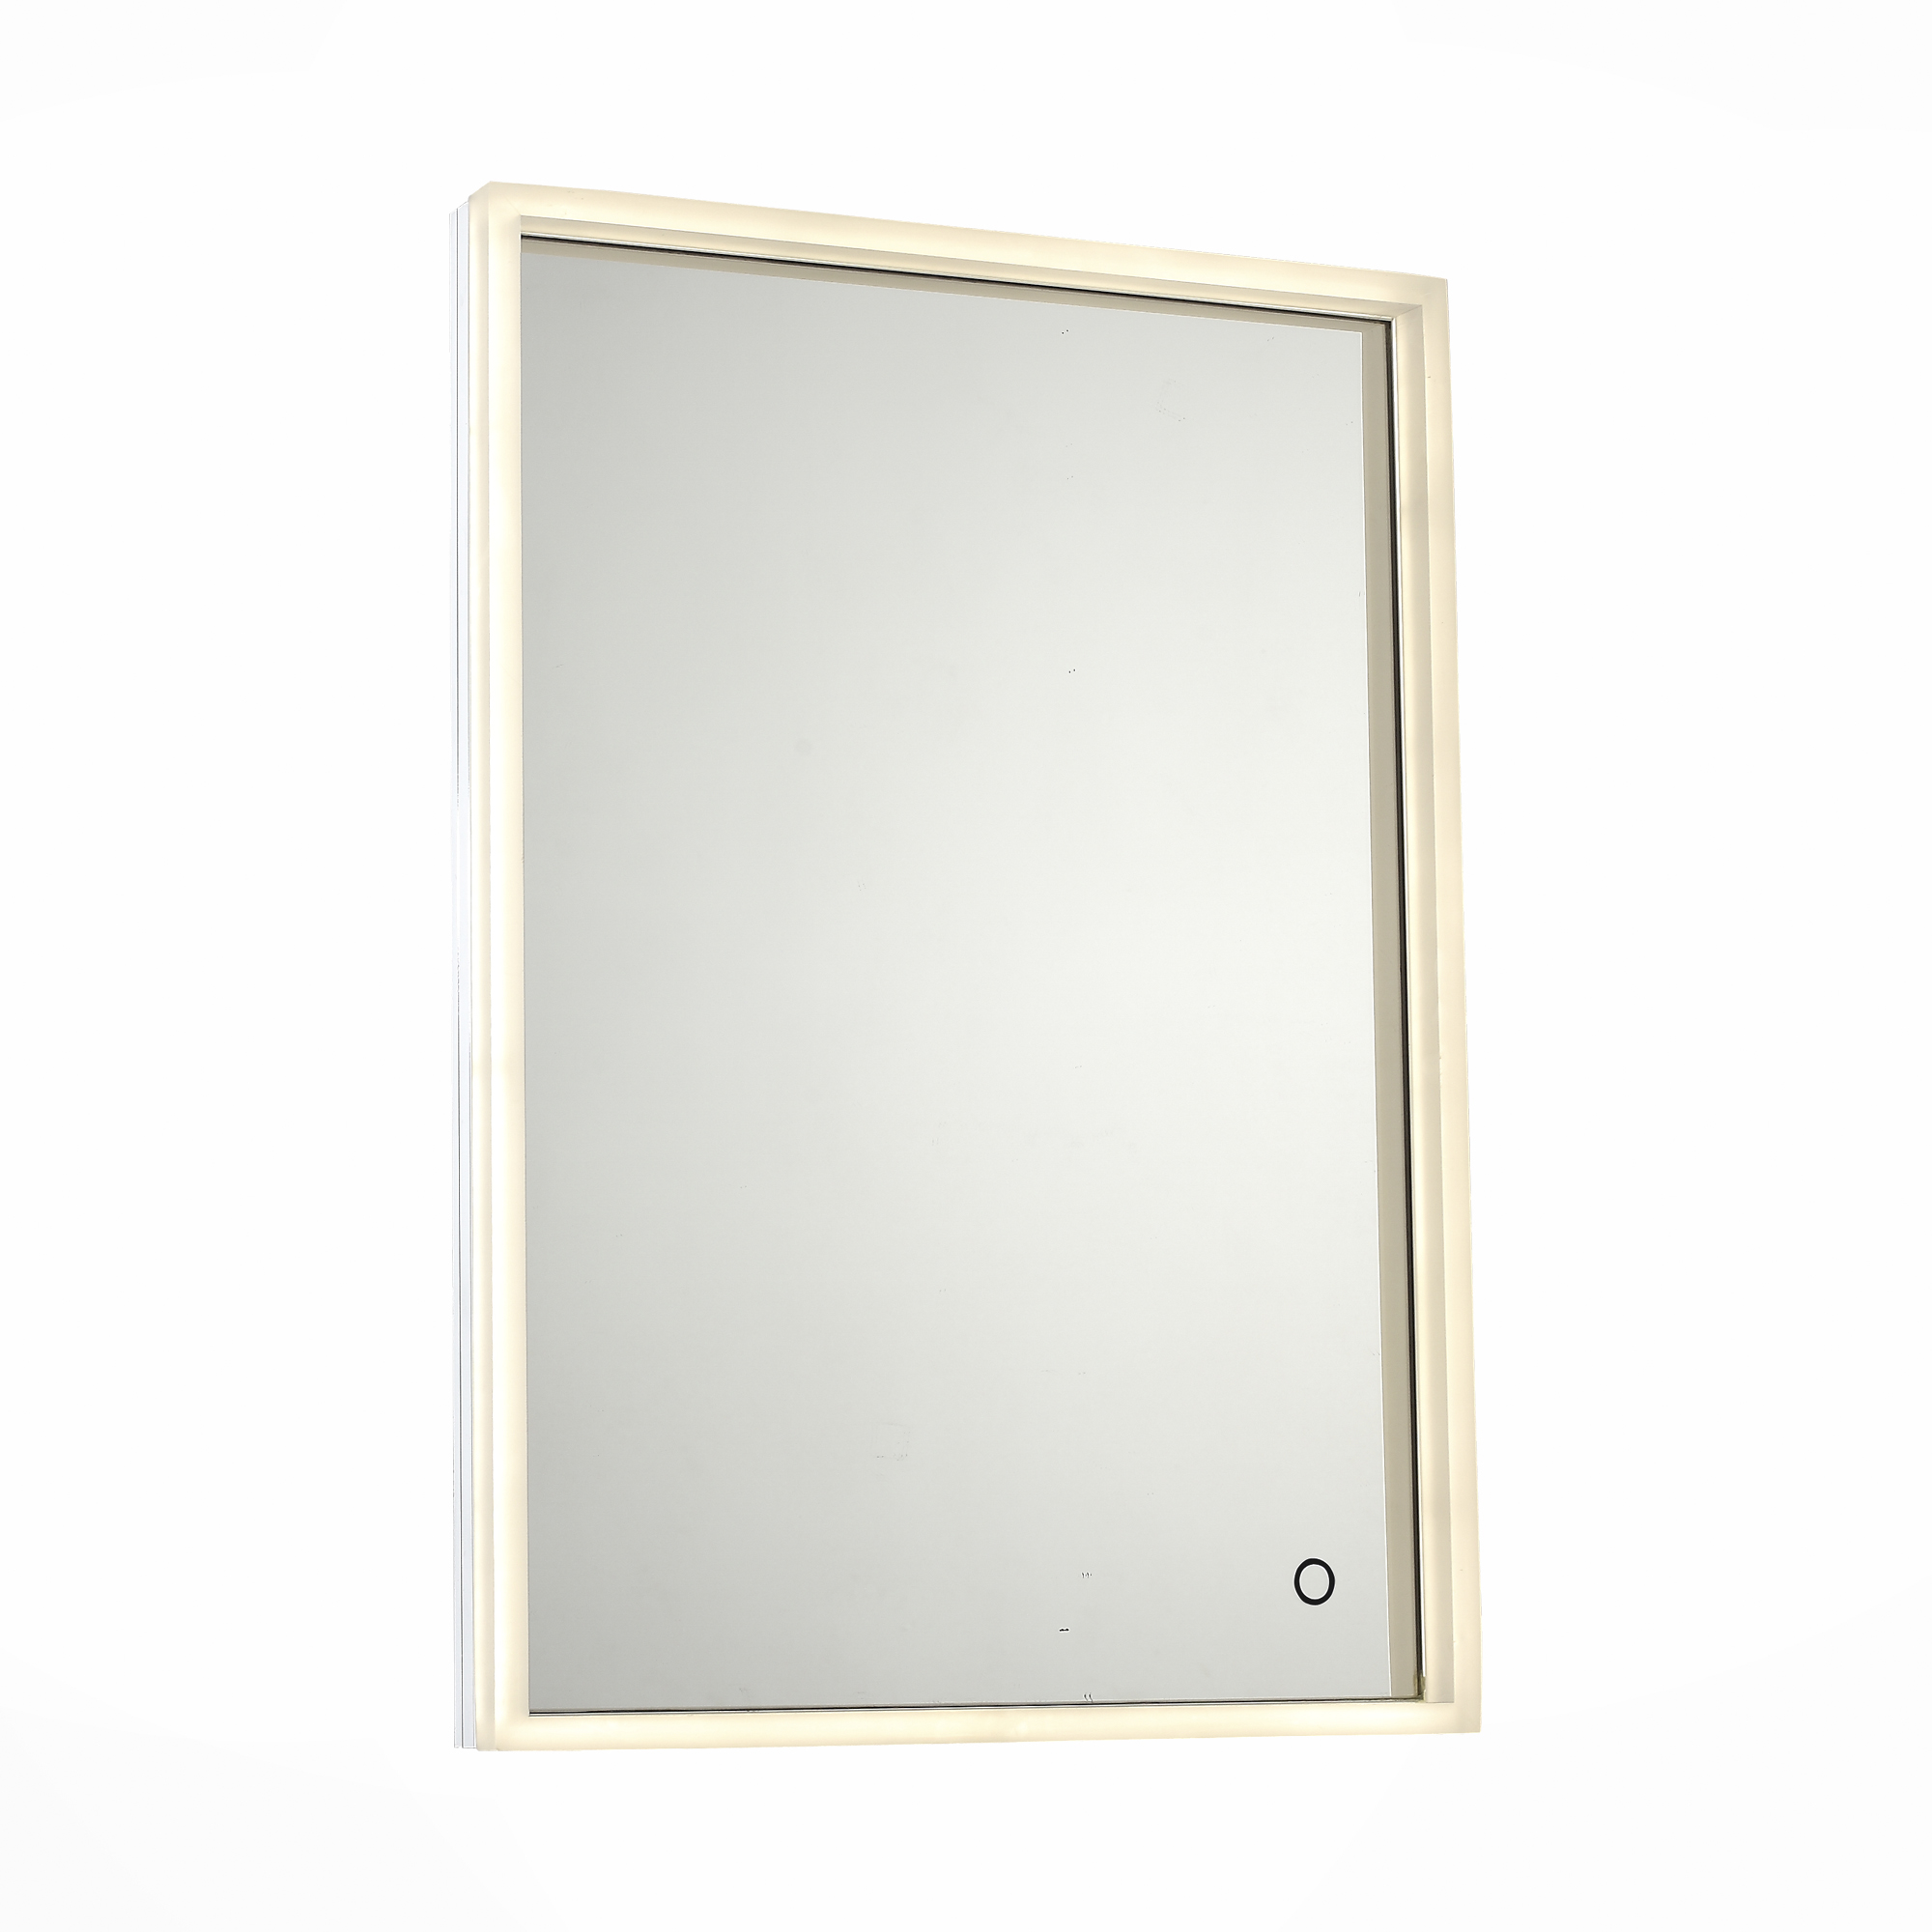 SL487.101.01 Зеркало с подсветкой, Specchio, серебристый + белый, LED 4500K 1*30W